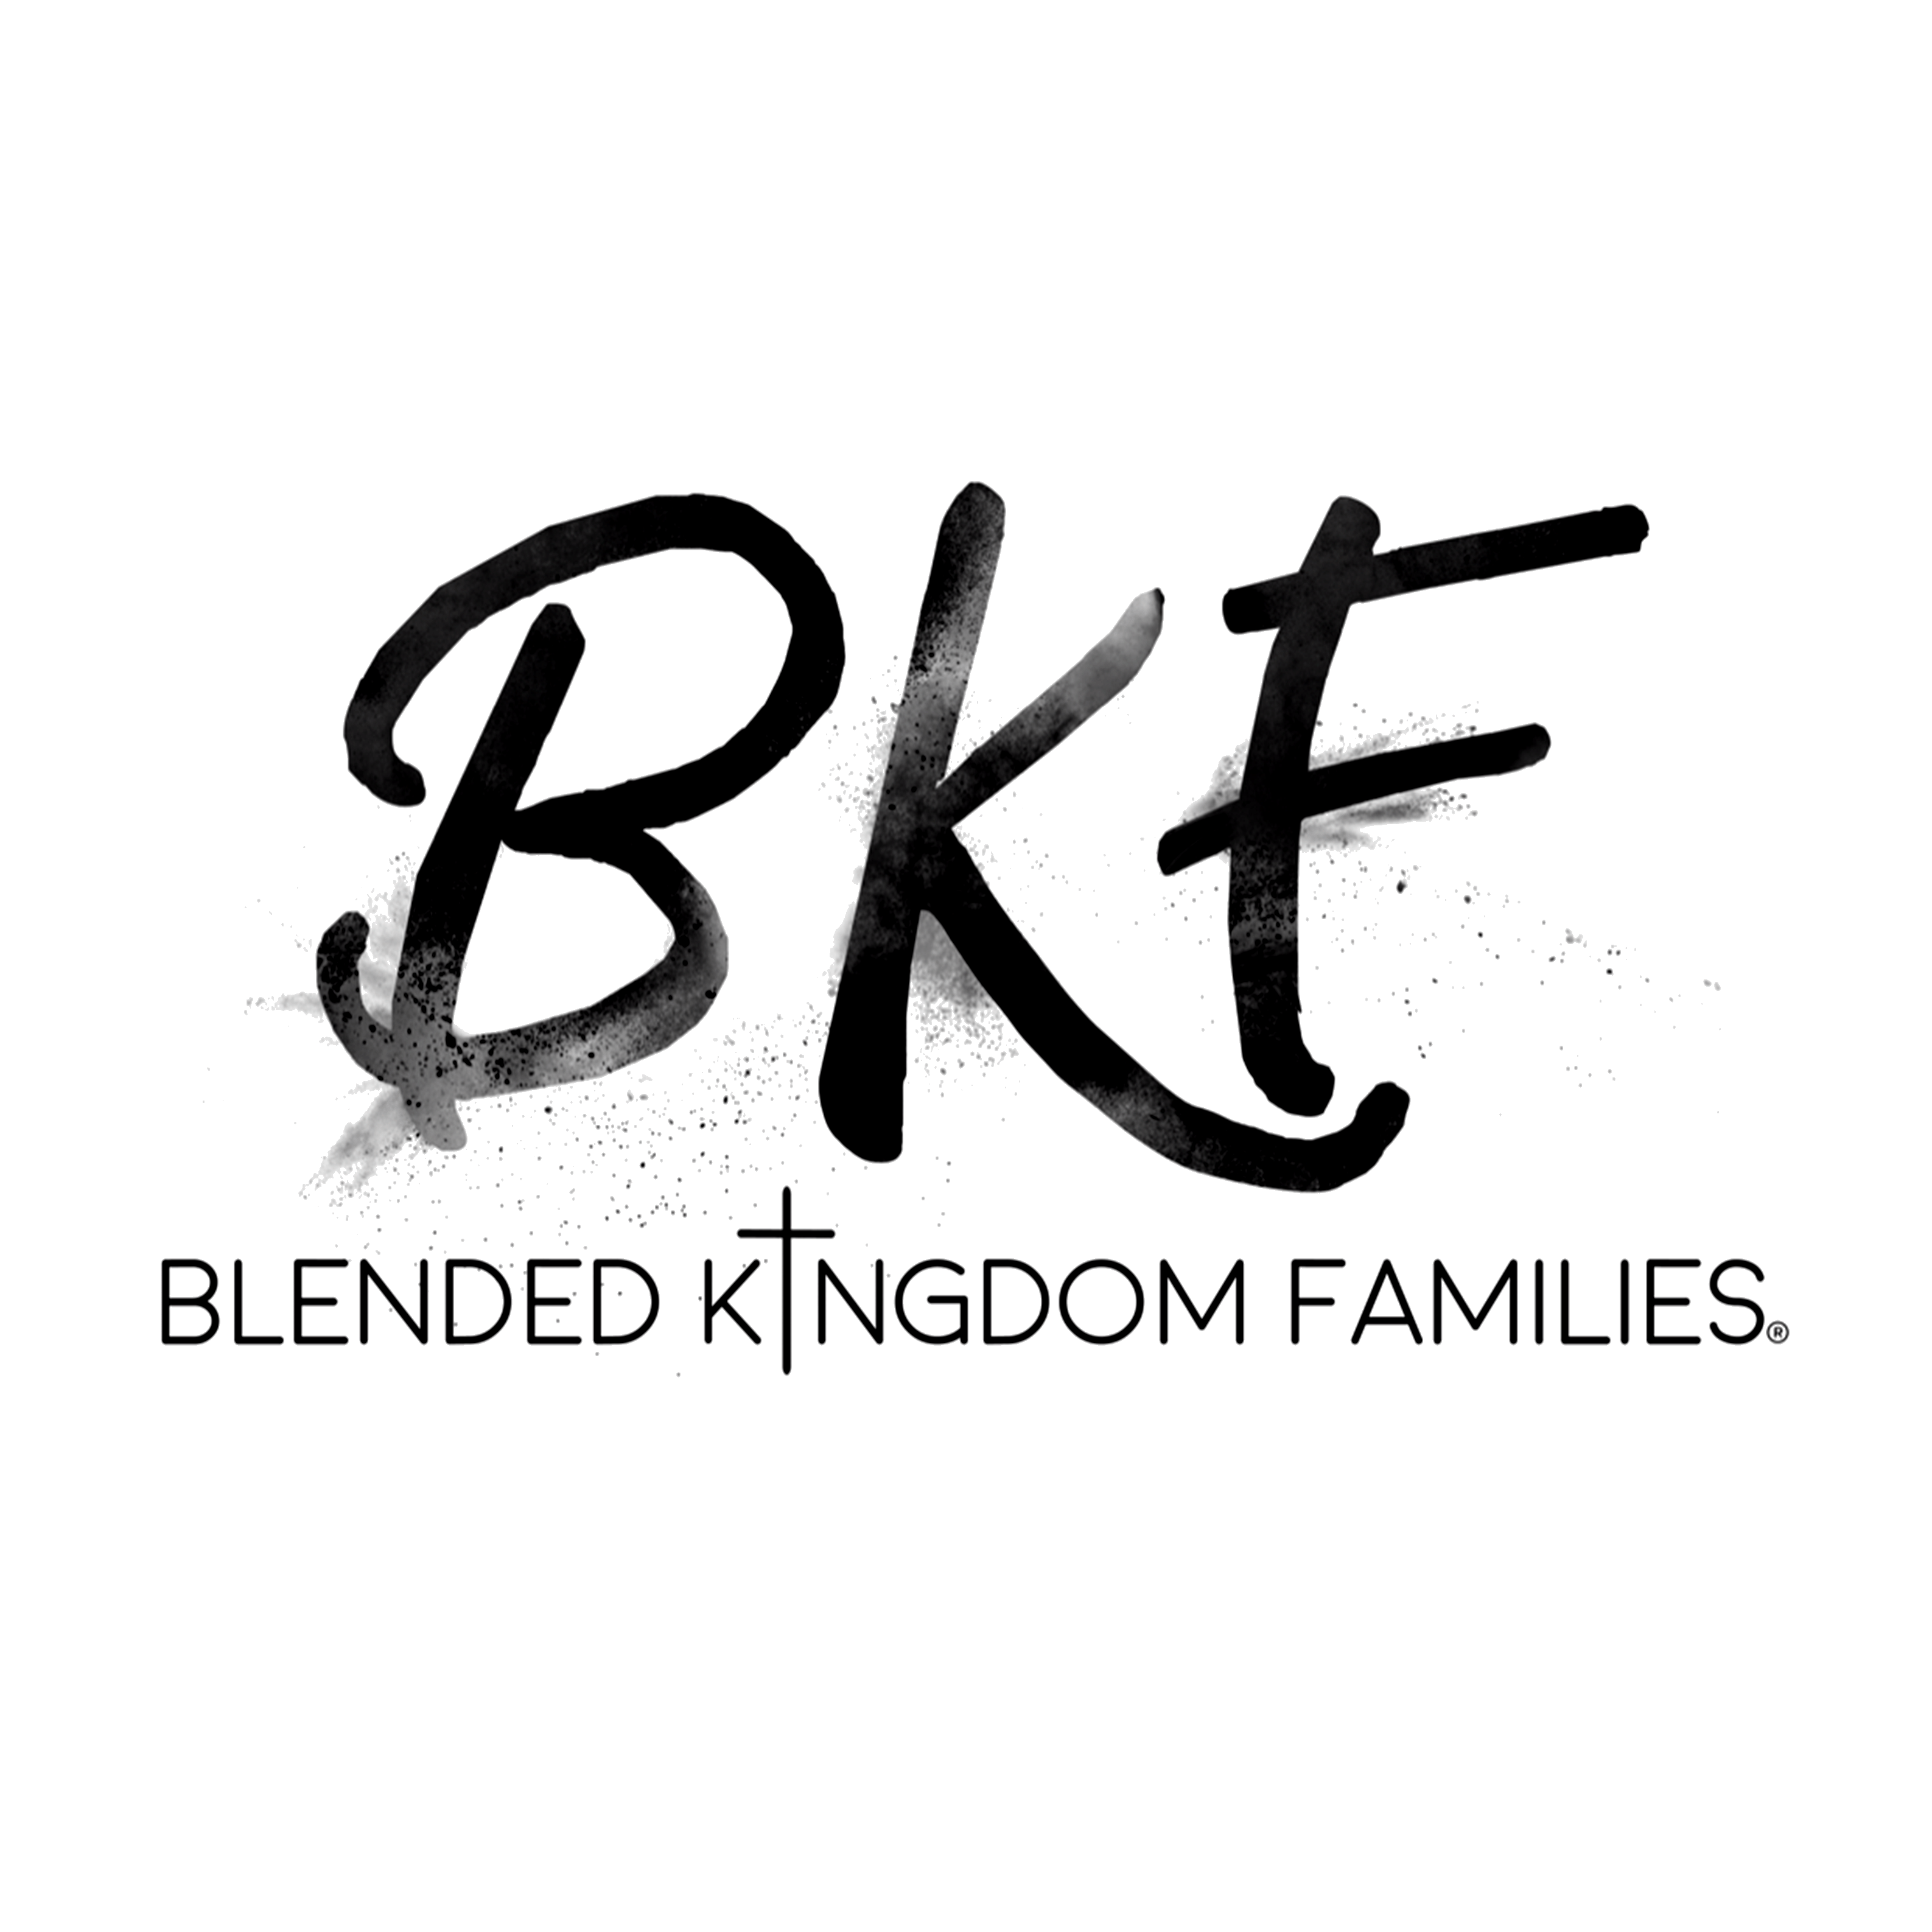 uw-logo-2022-blended-kingdom-families